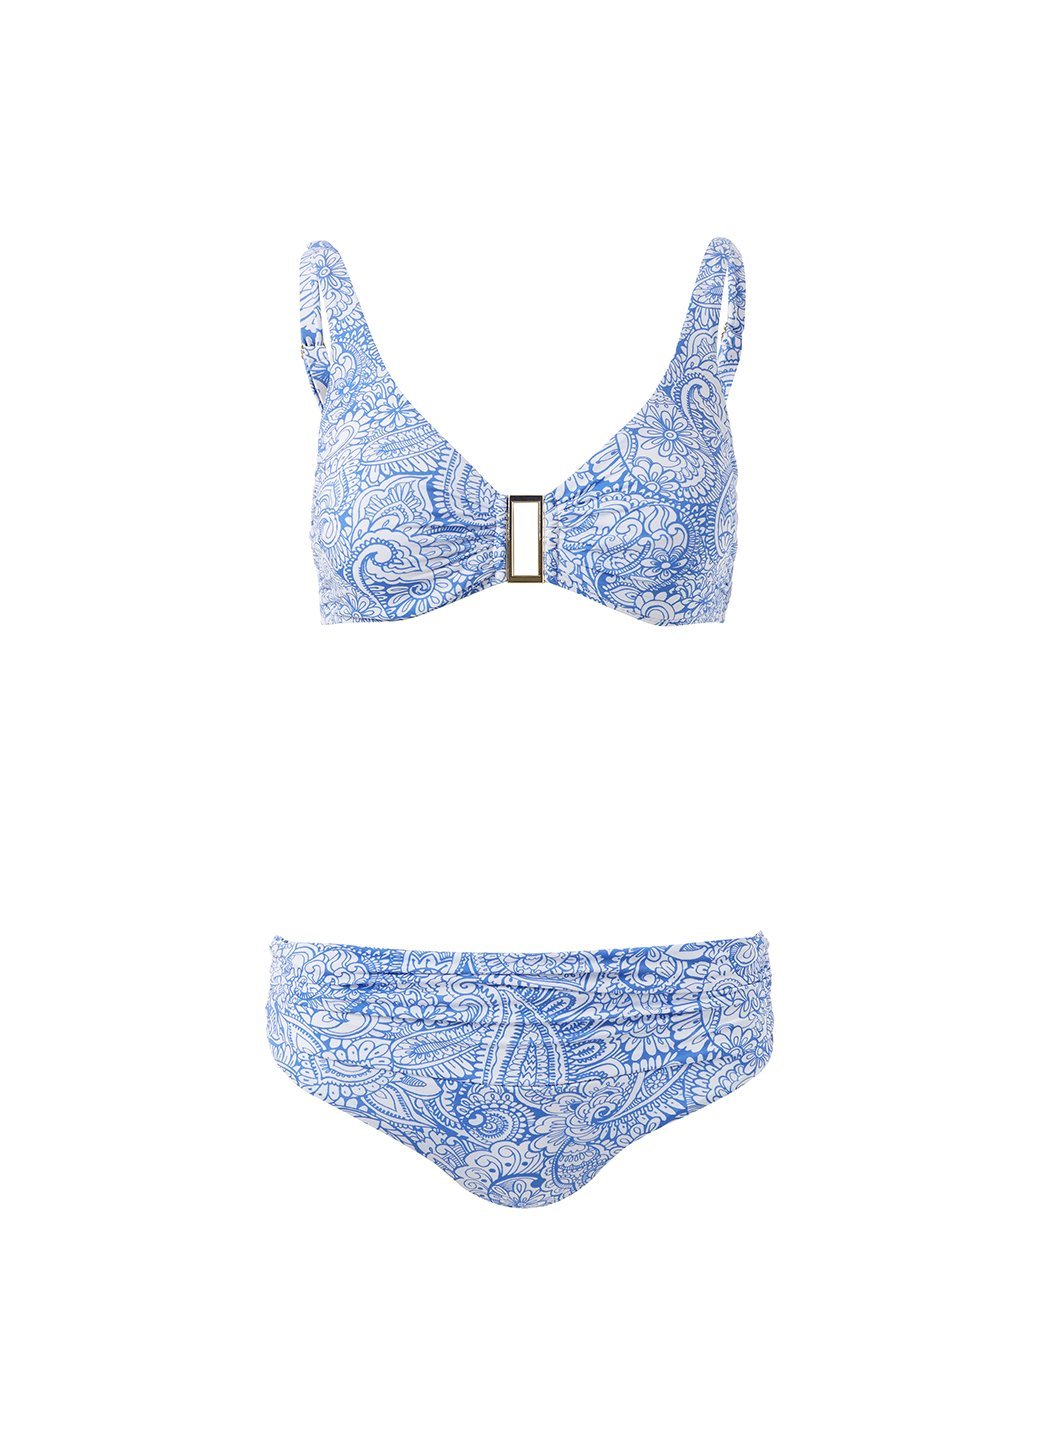 Bel Air bikini bottoms in blue - Melissa Odabash